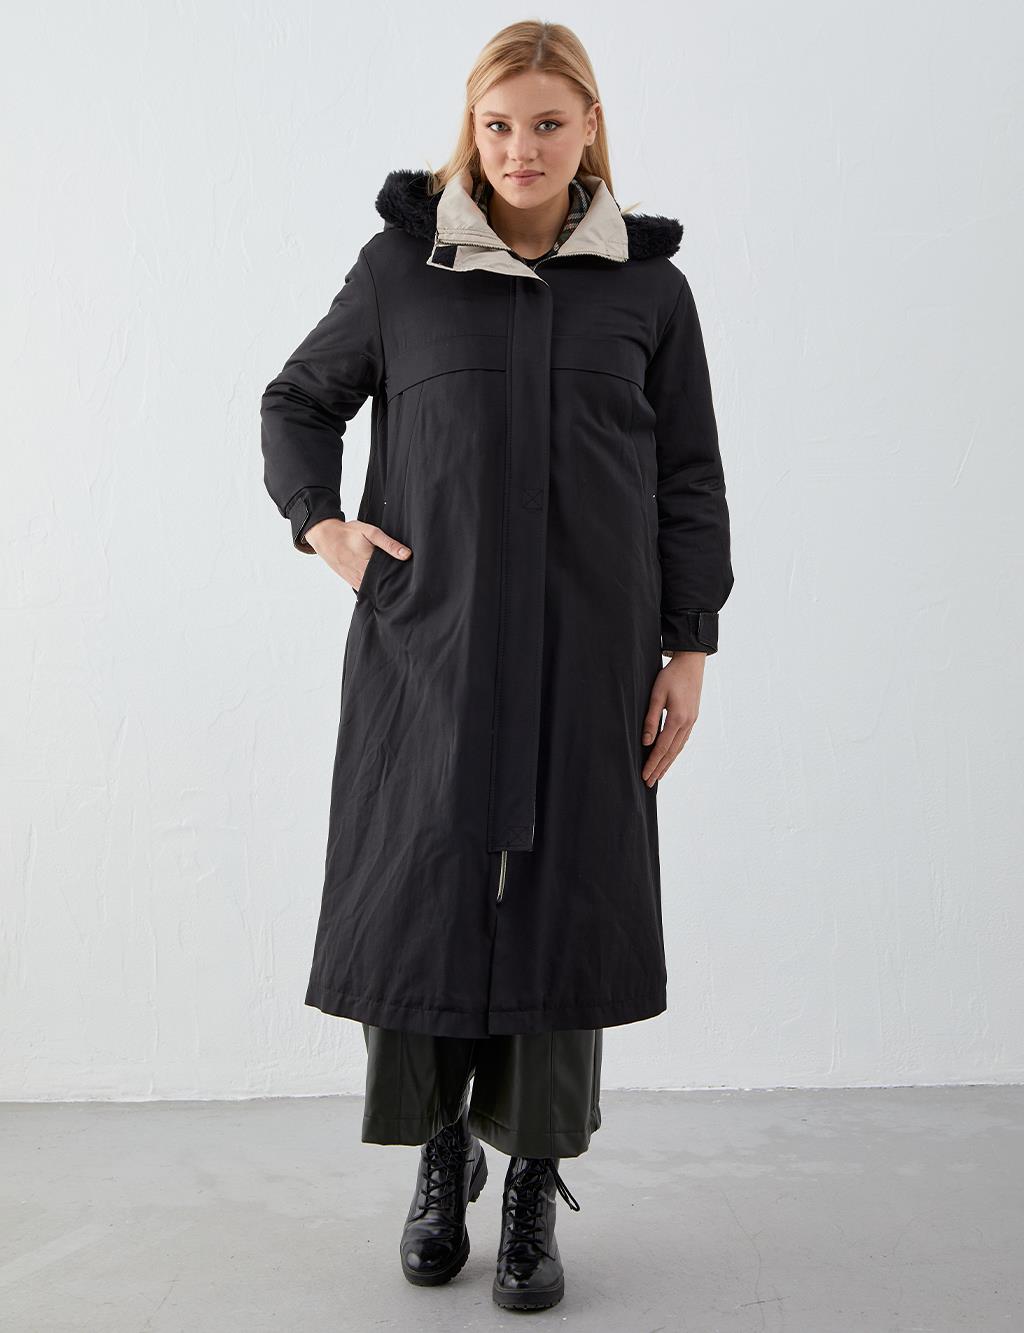 Furry Hooded Inflatable Coat Black